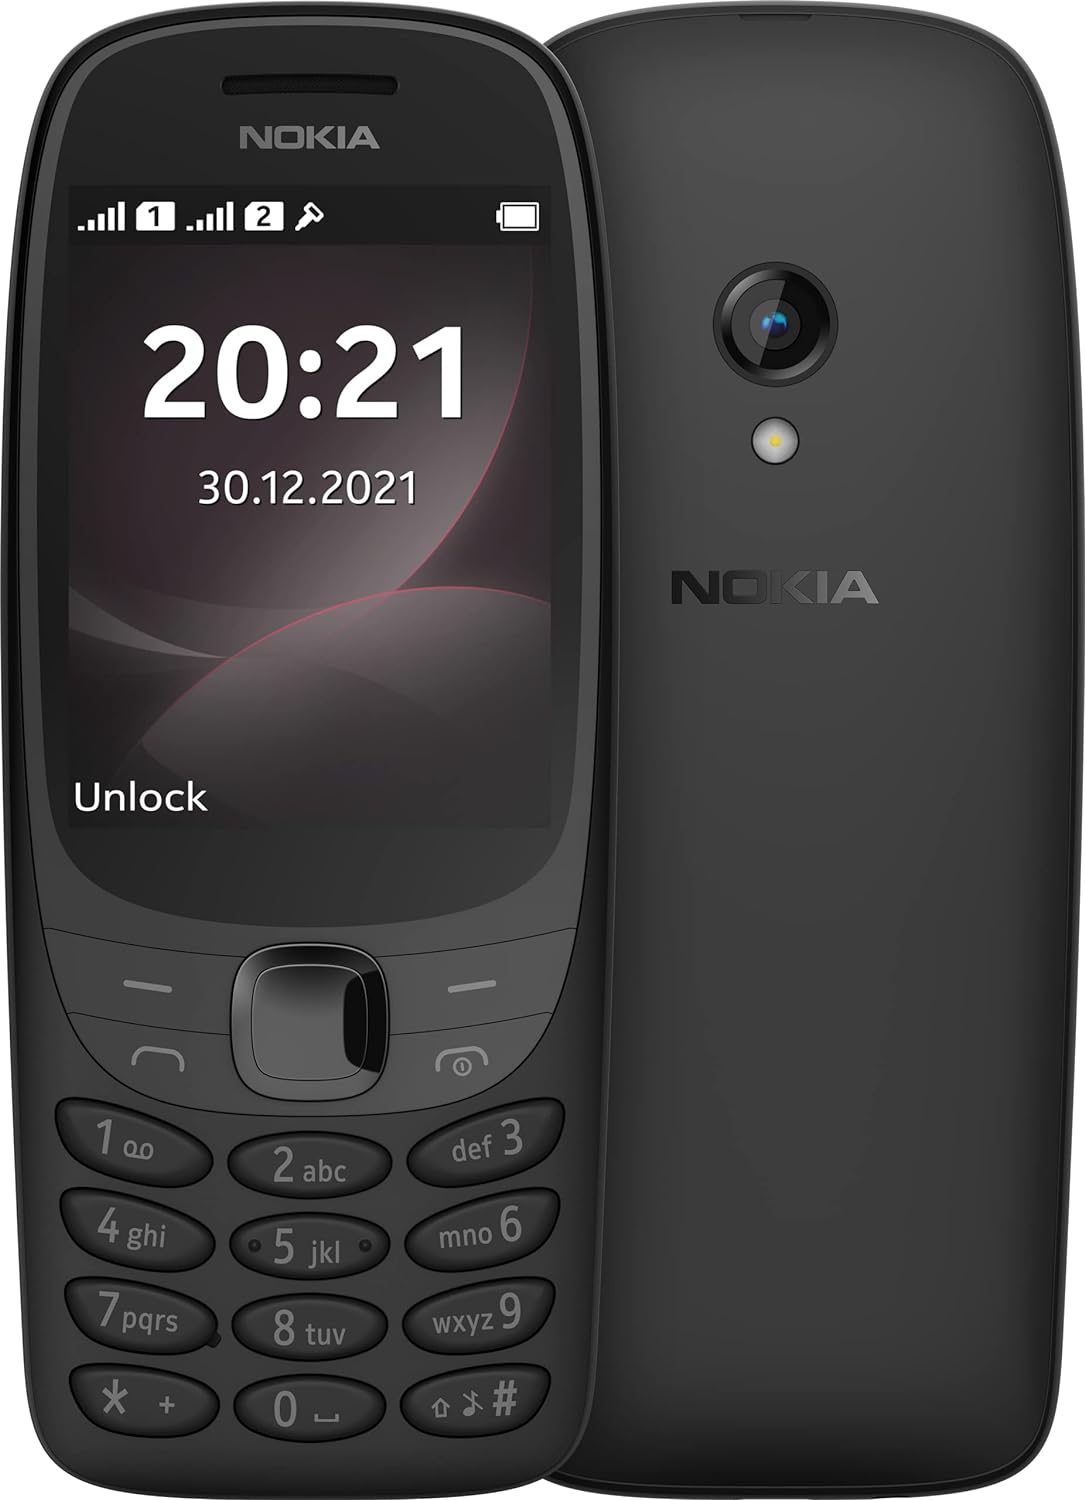 Nokia 6310 Dual Sim